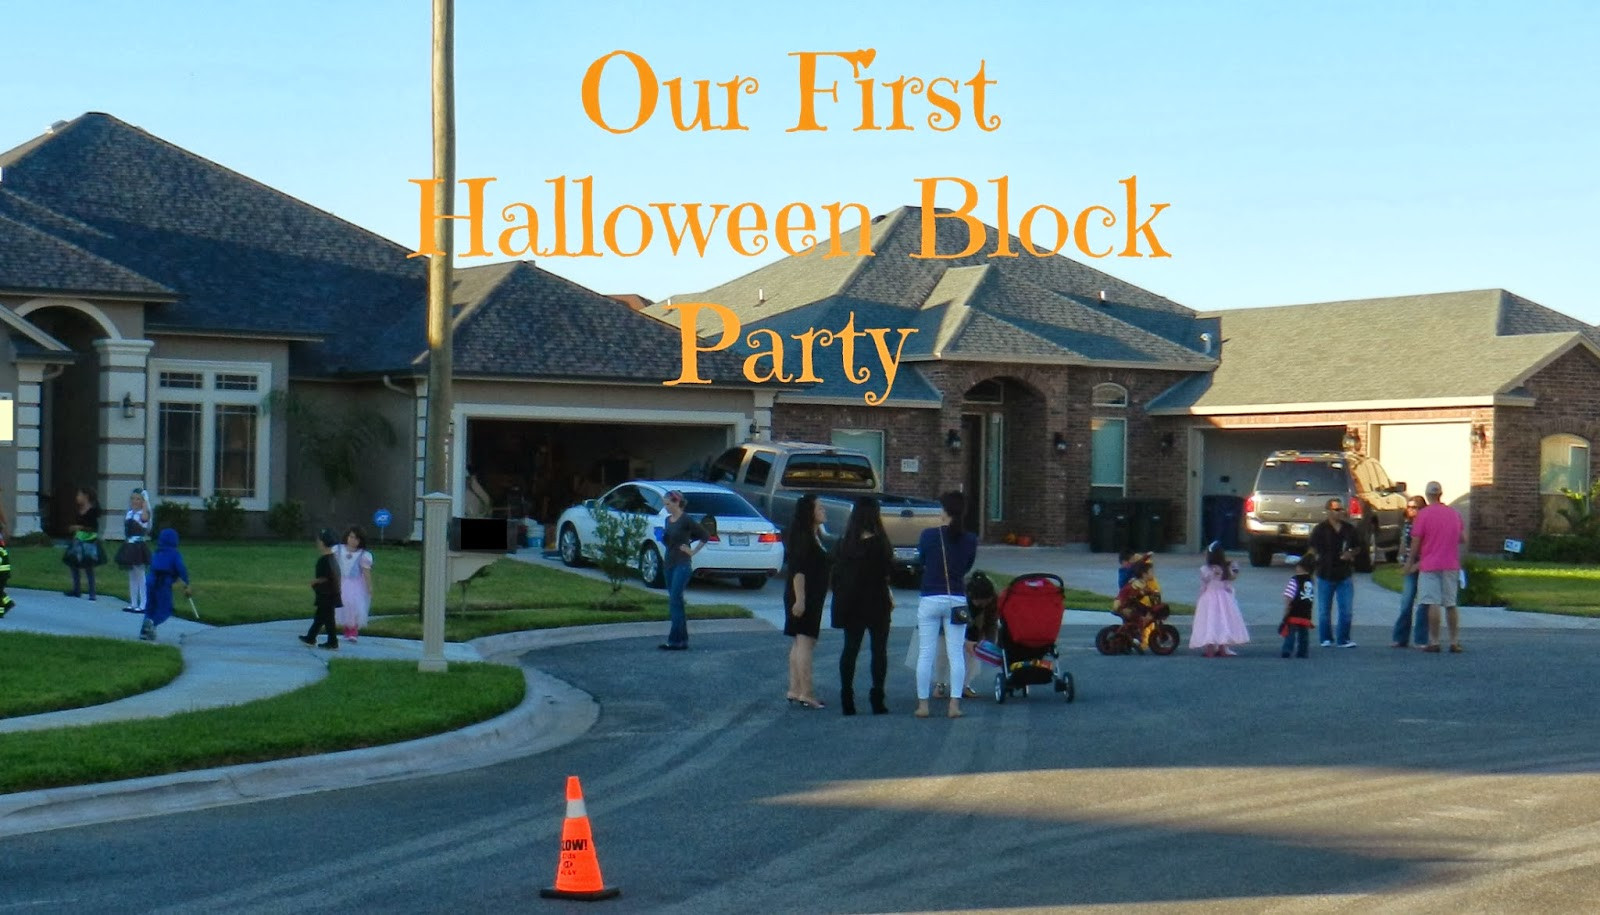 Halloween Neighborhood Party Ideas
 Mama Gets It Done Halloween Block Party